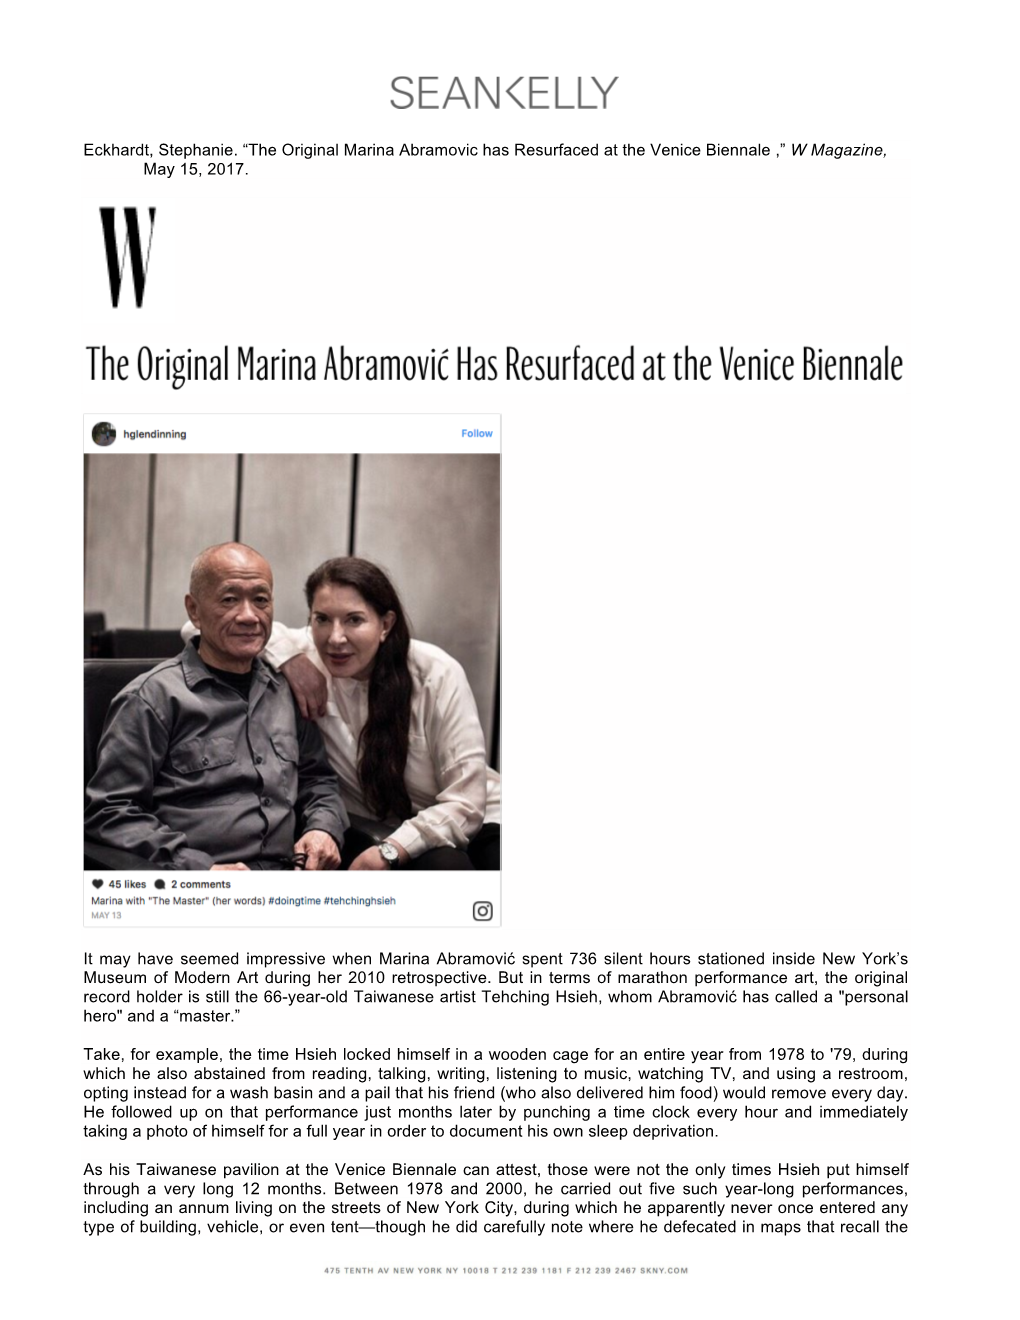 Eckhardt, Stephanie. “The Original Marina Abramovic Has Resurfaced at the Venice Biennale ,” W Magazine, May 15, 2017